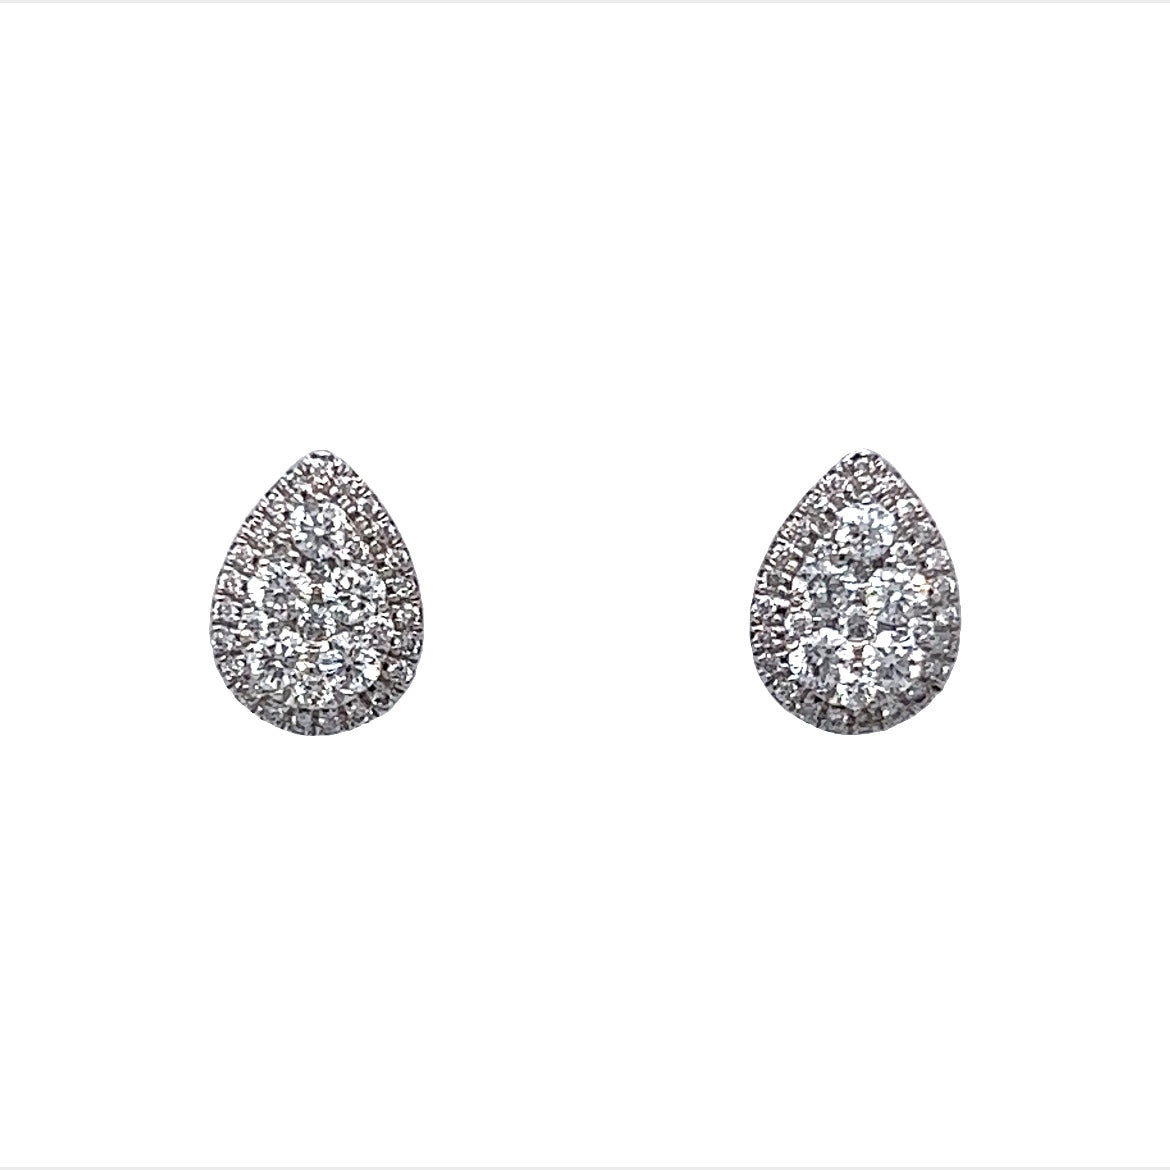 Petit Pear Shaped Earrings w/ Diamonds 14K White Gold